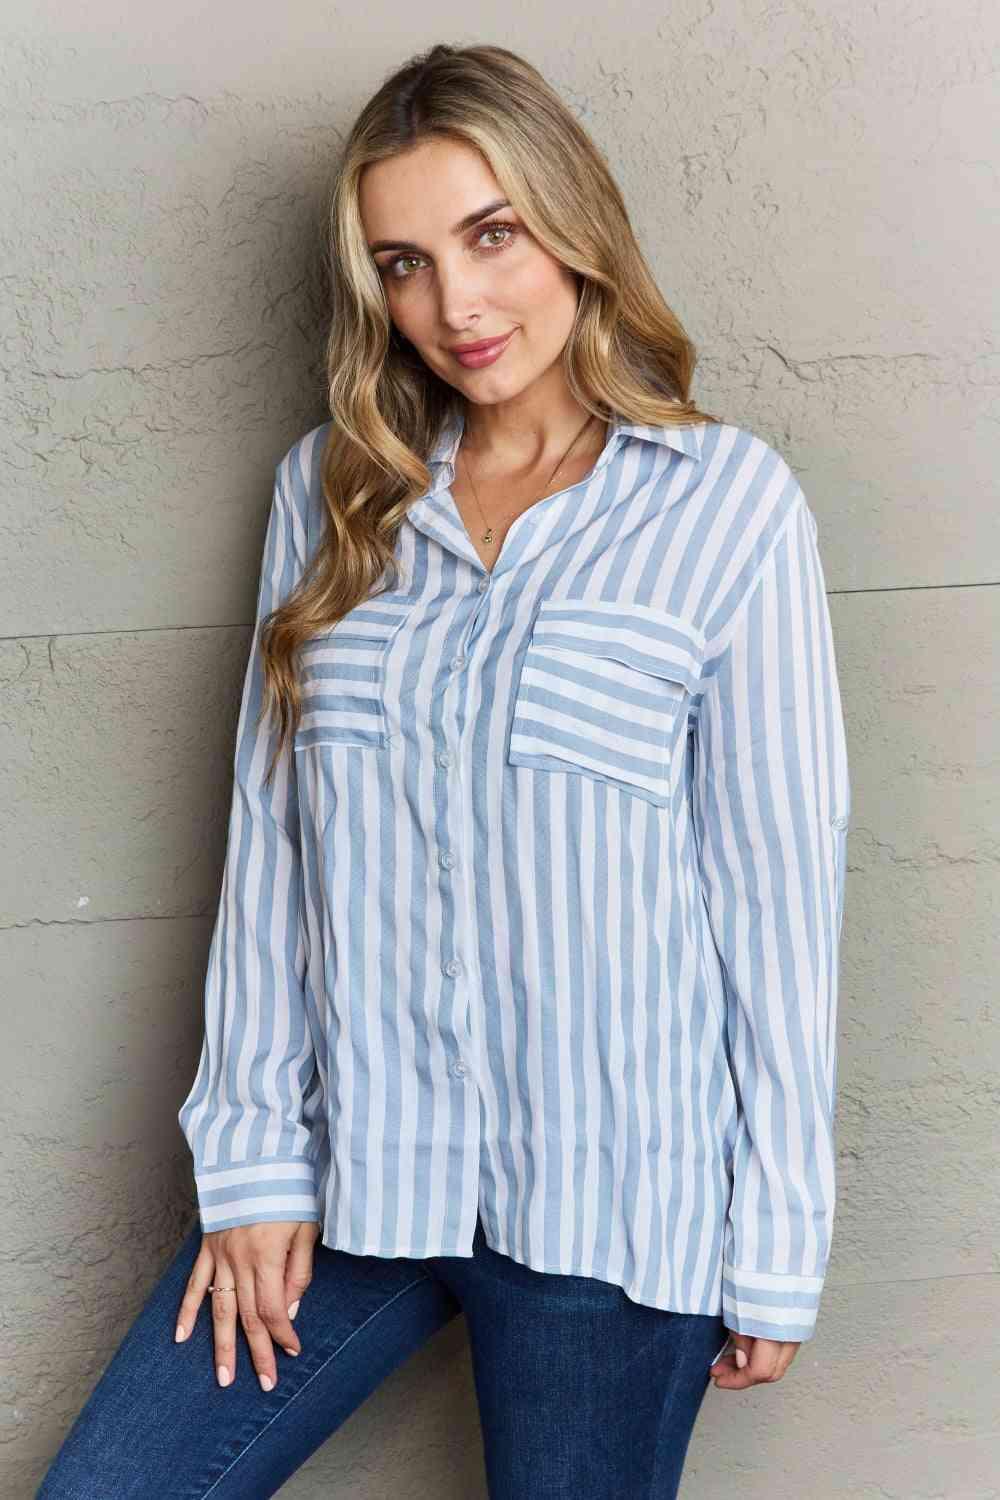 Women's Shirts Collared Button Down Striped Shirt